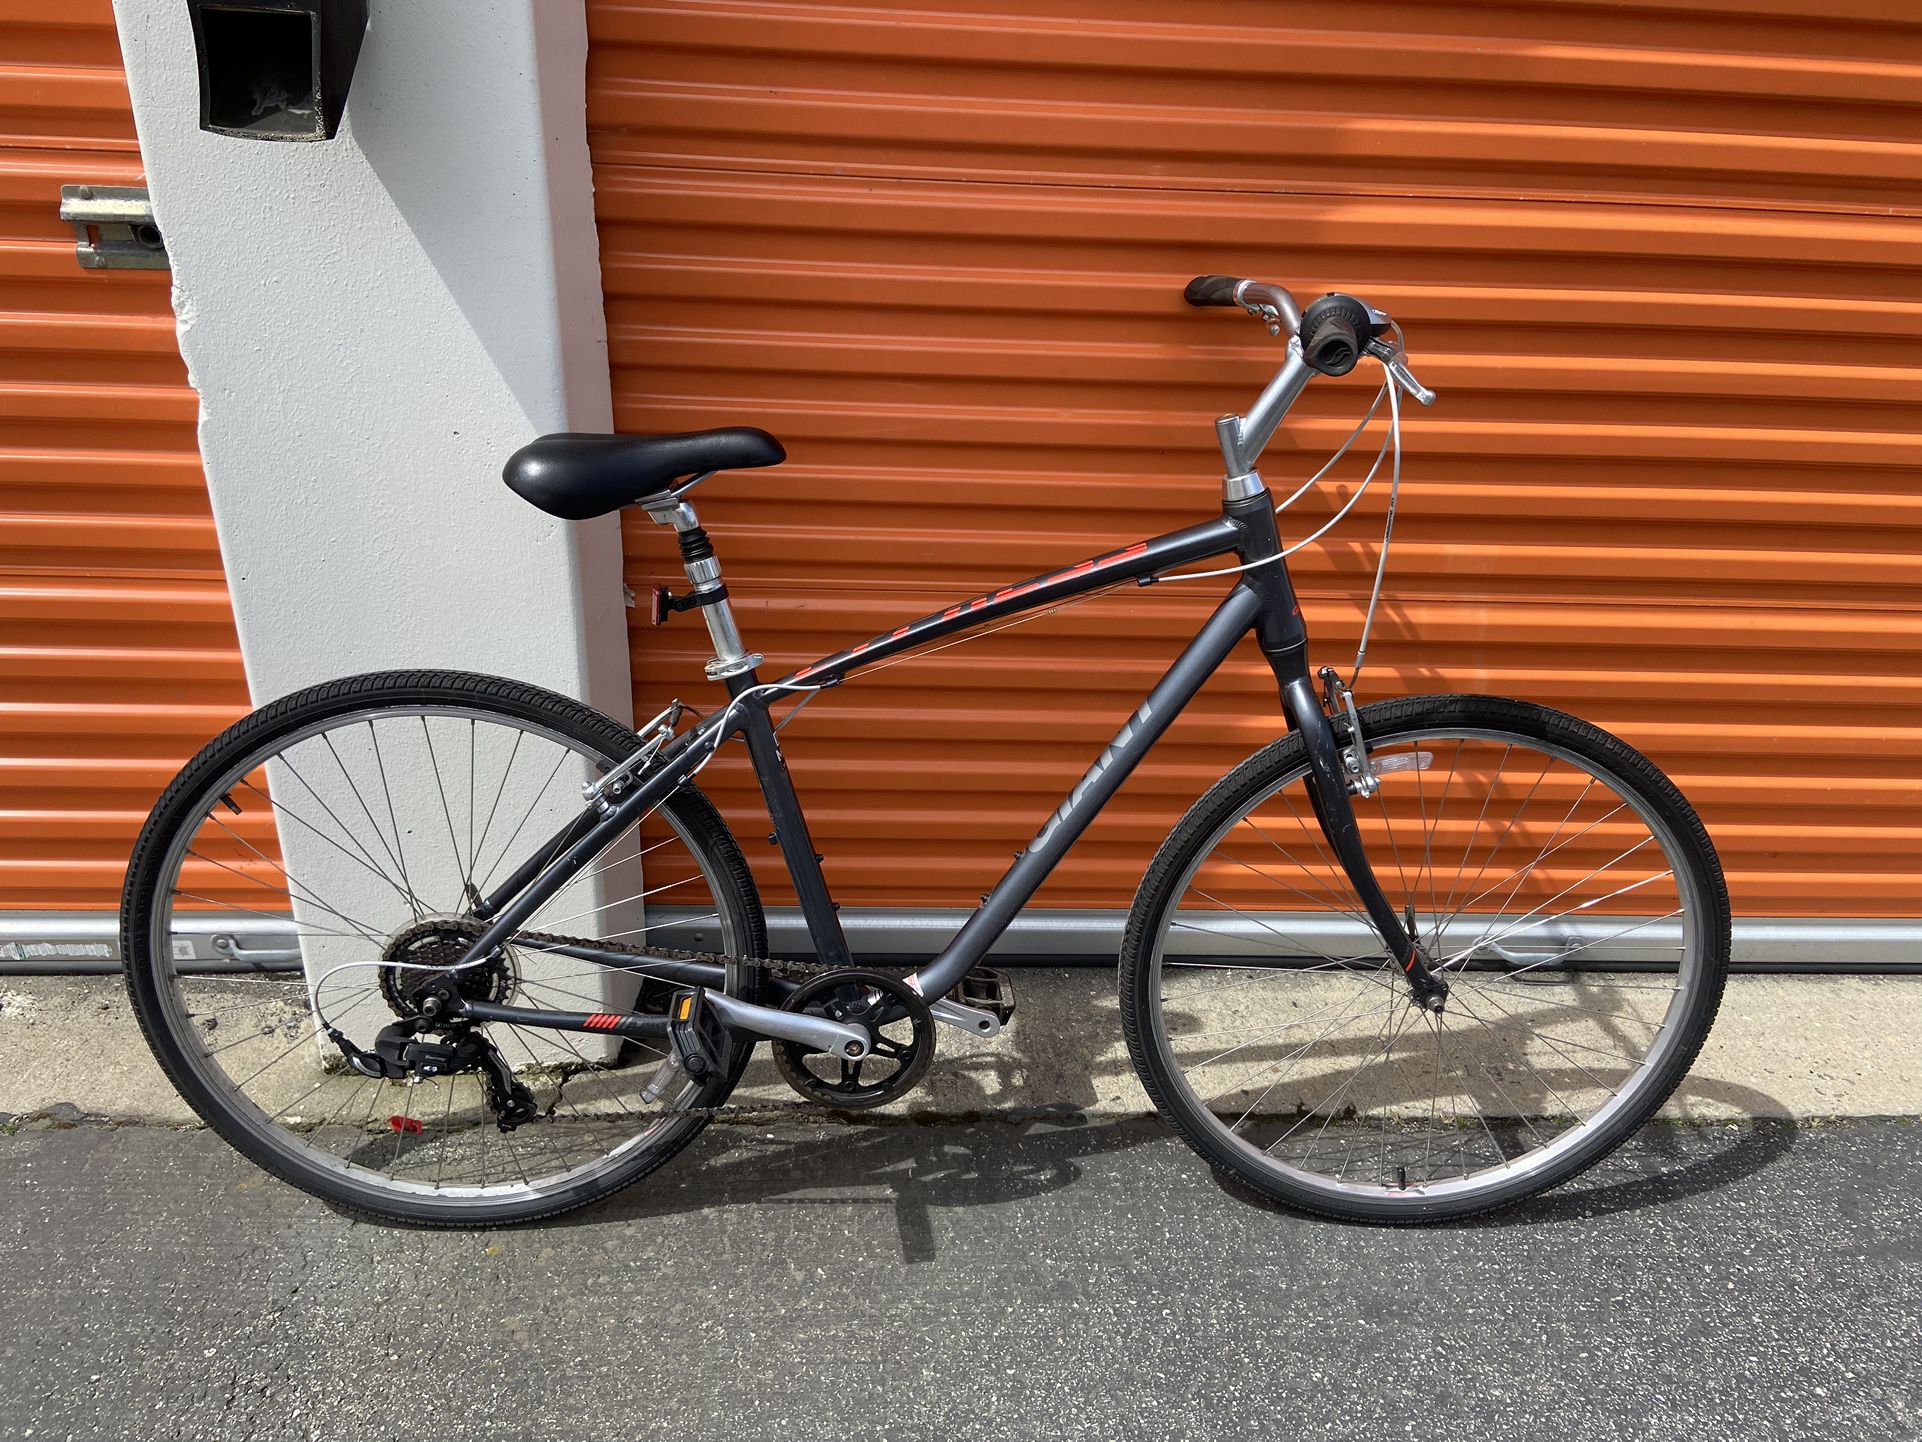 Giant Cypress Aluminum Hybrid Comfort Bike